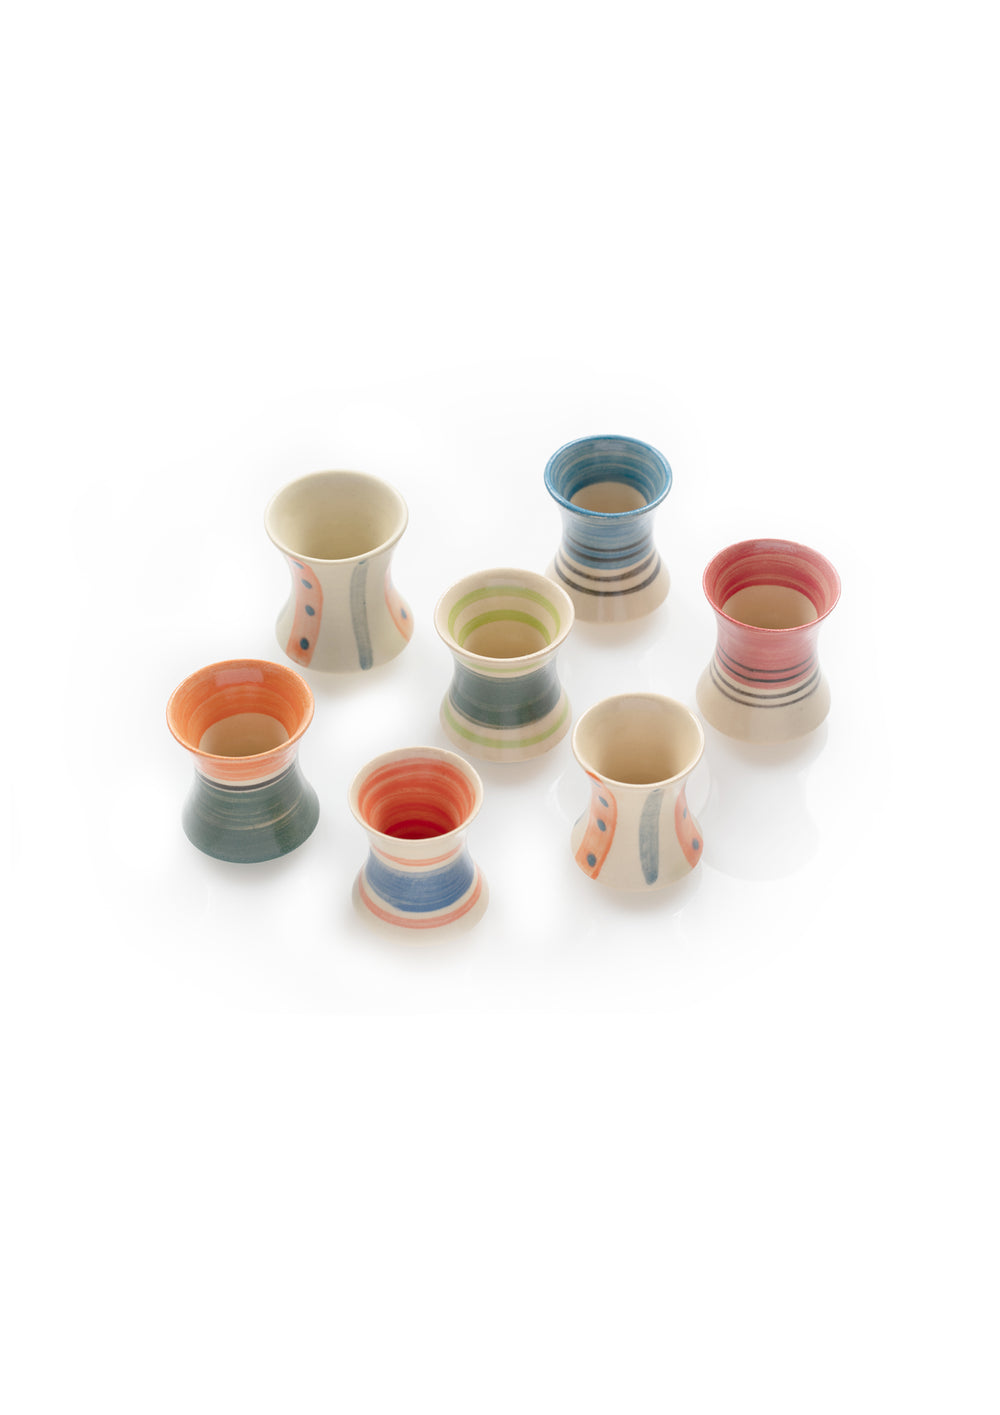 Ceramic cup (hourglass shape)